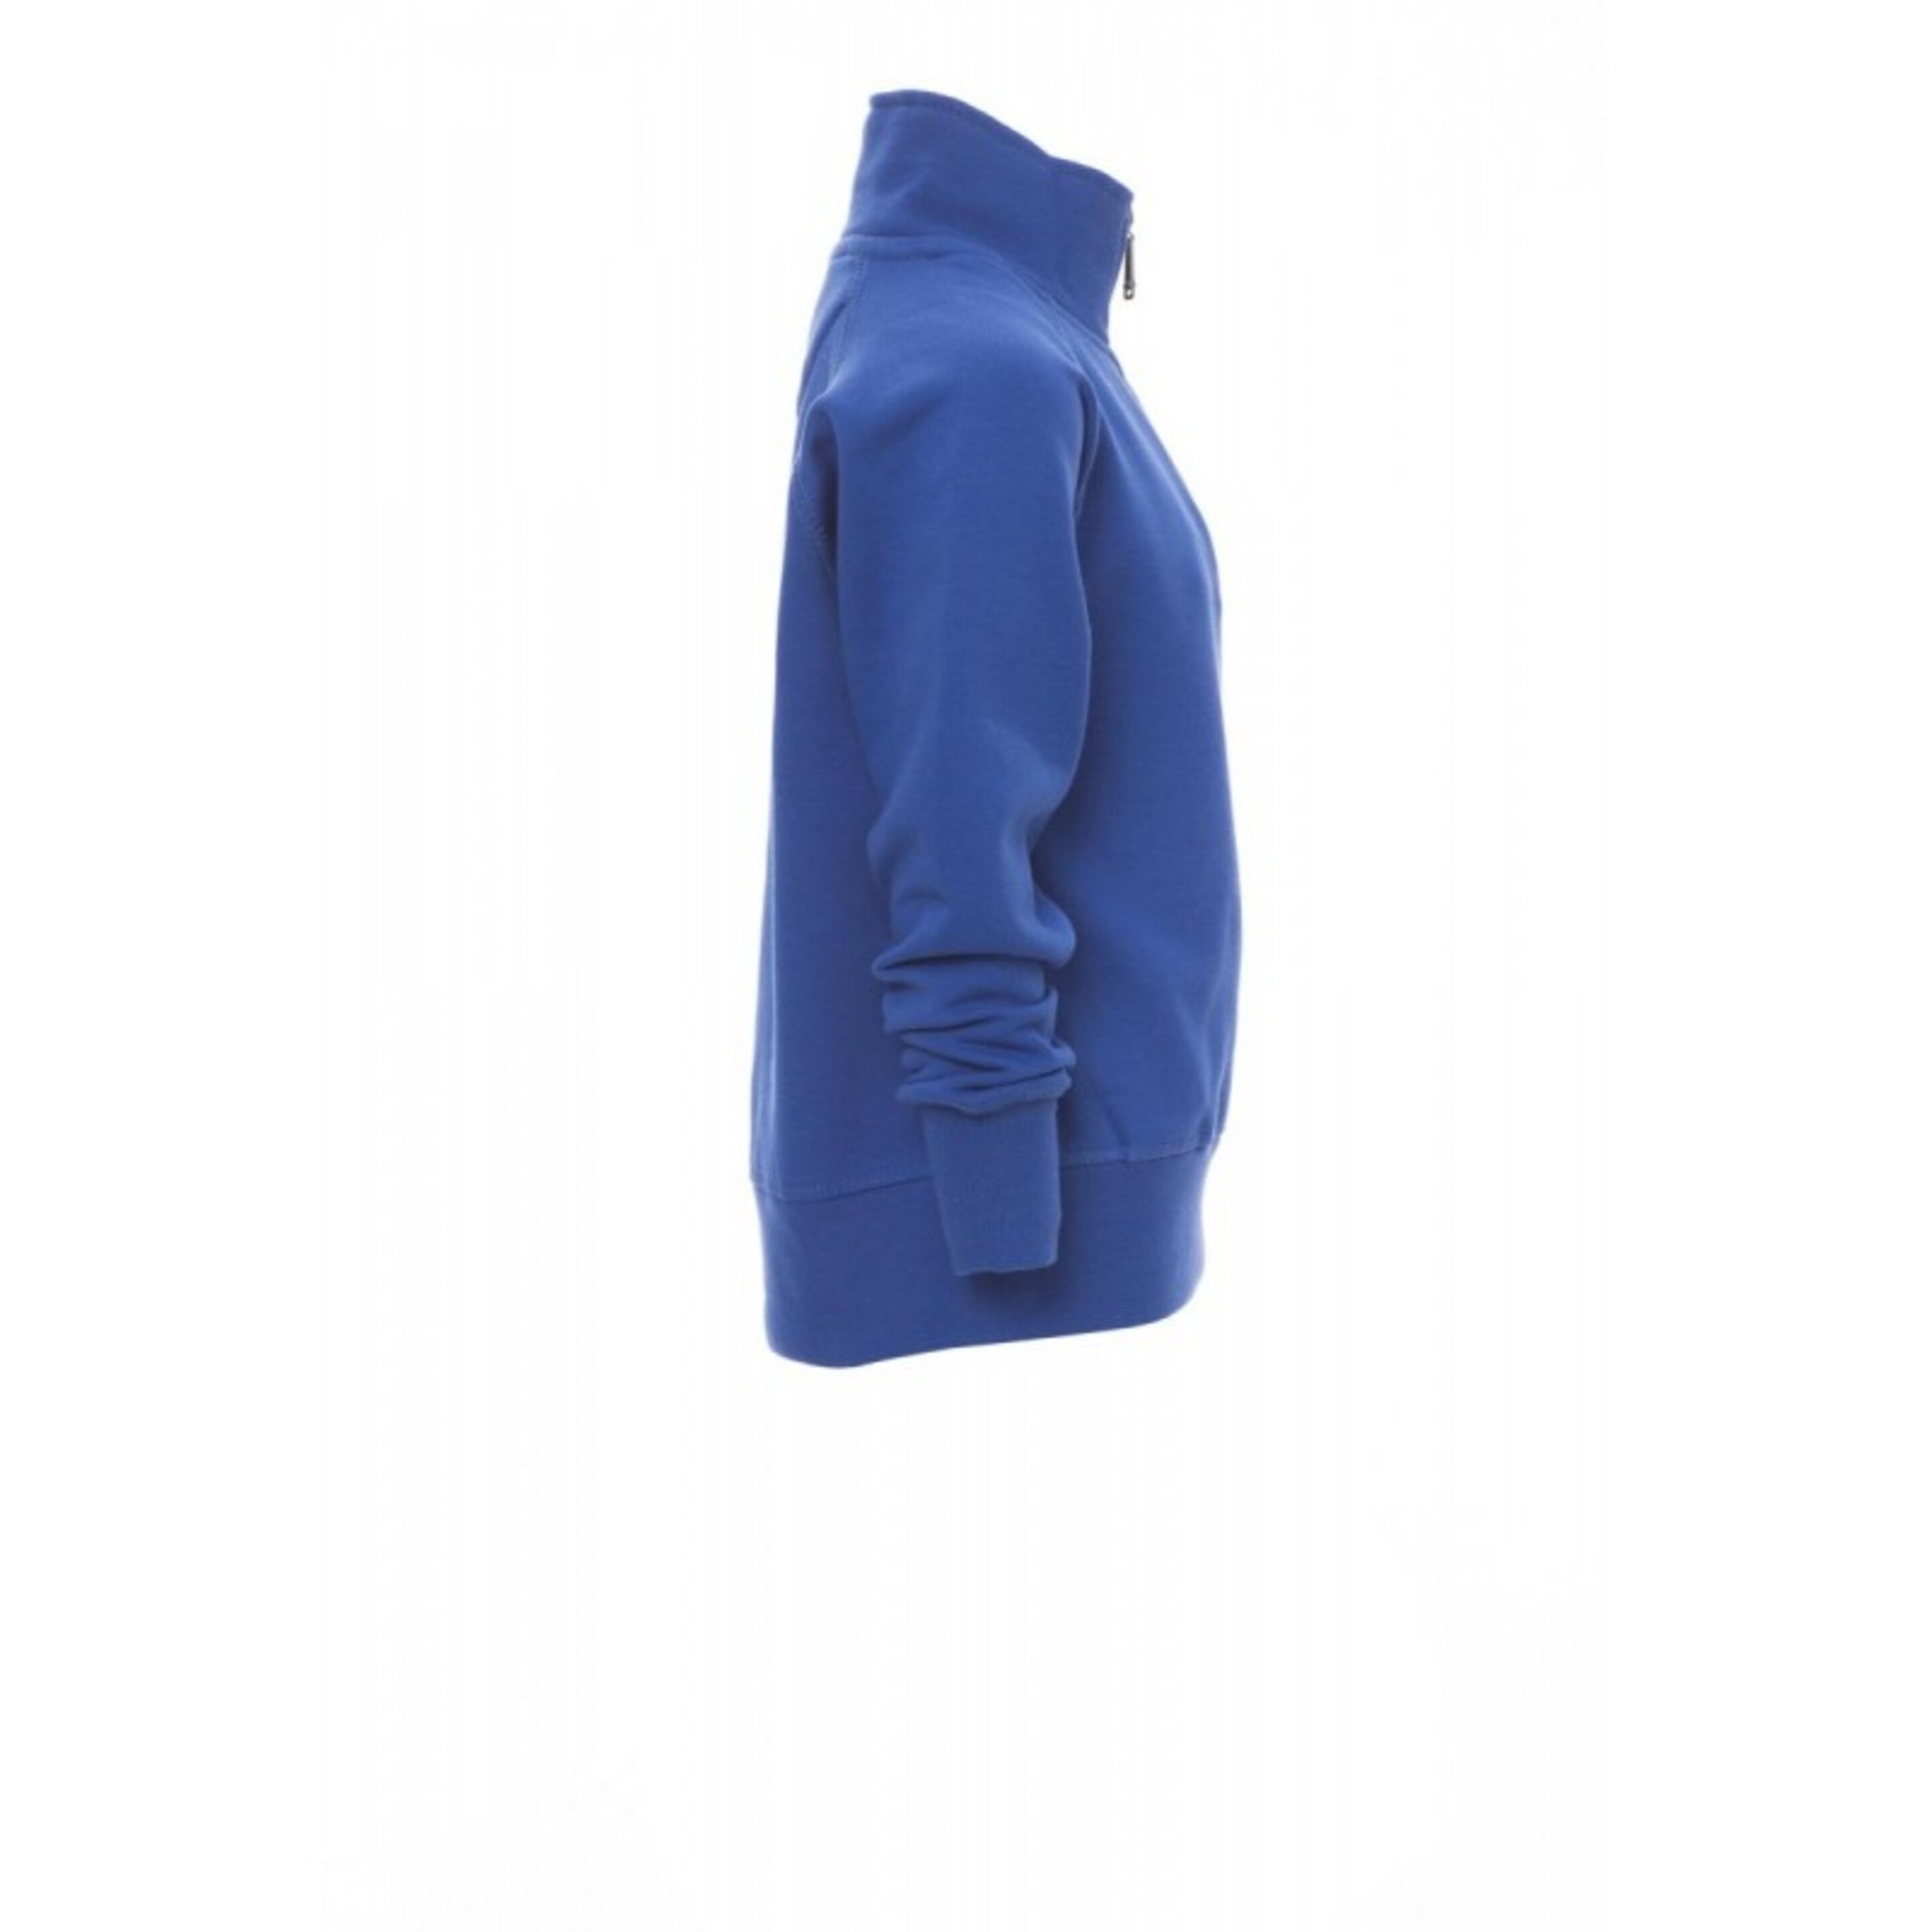 Sweatshirts 300gr Zico  Quilted - esporte em suas roupas | Sport Zone MKP